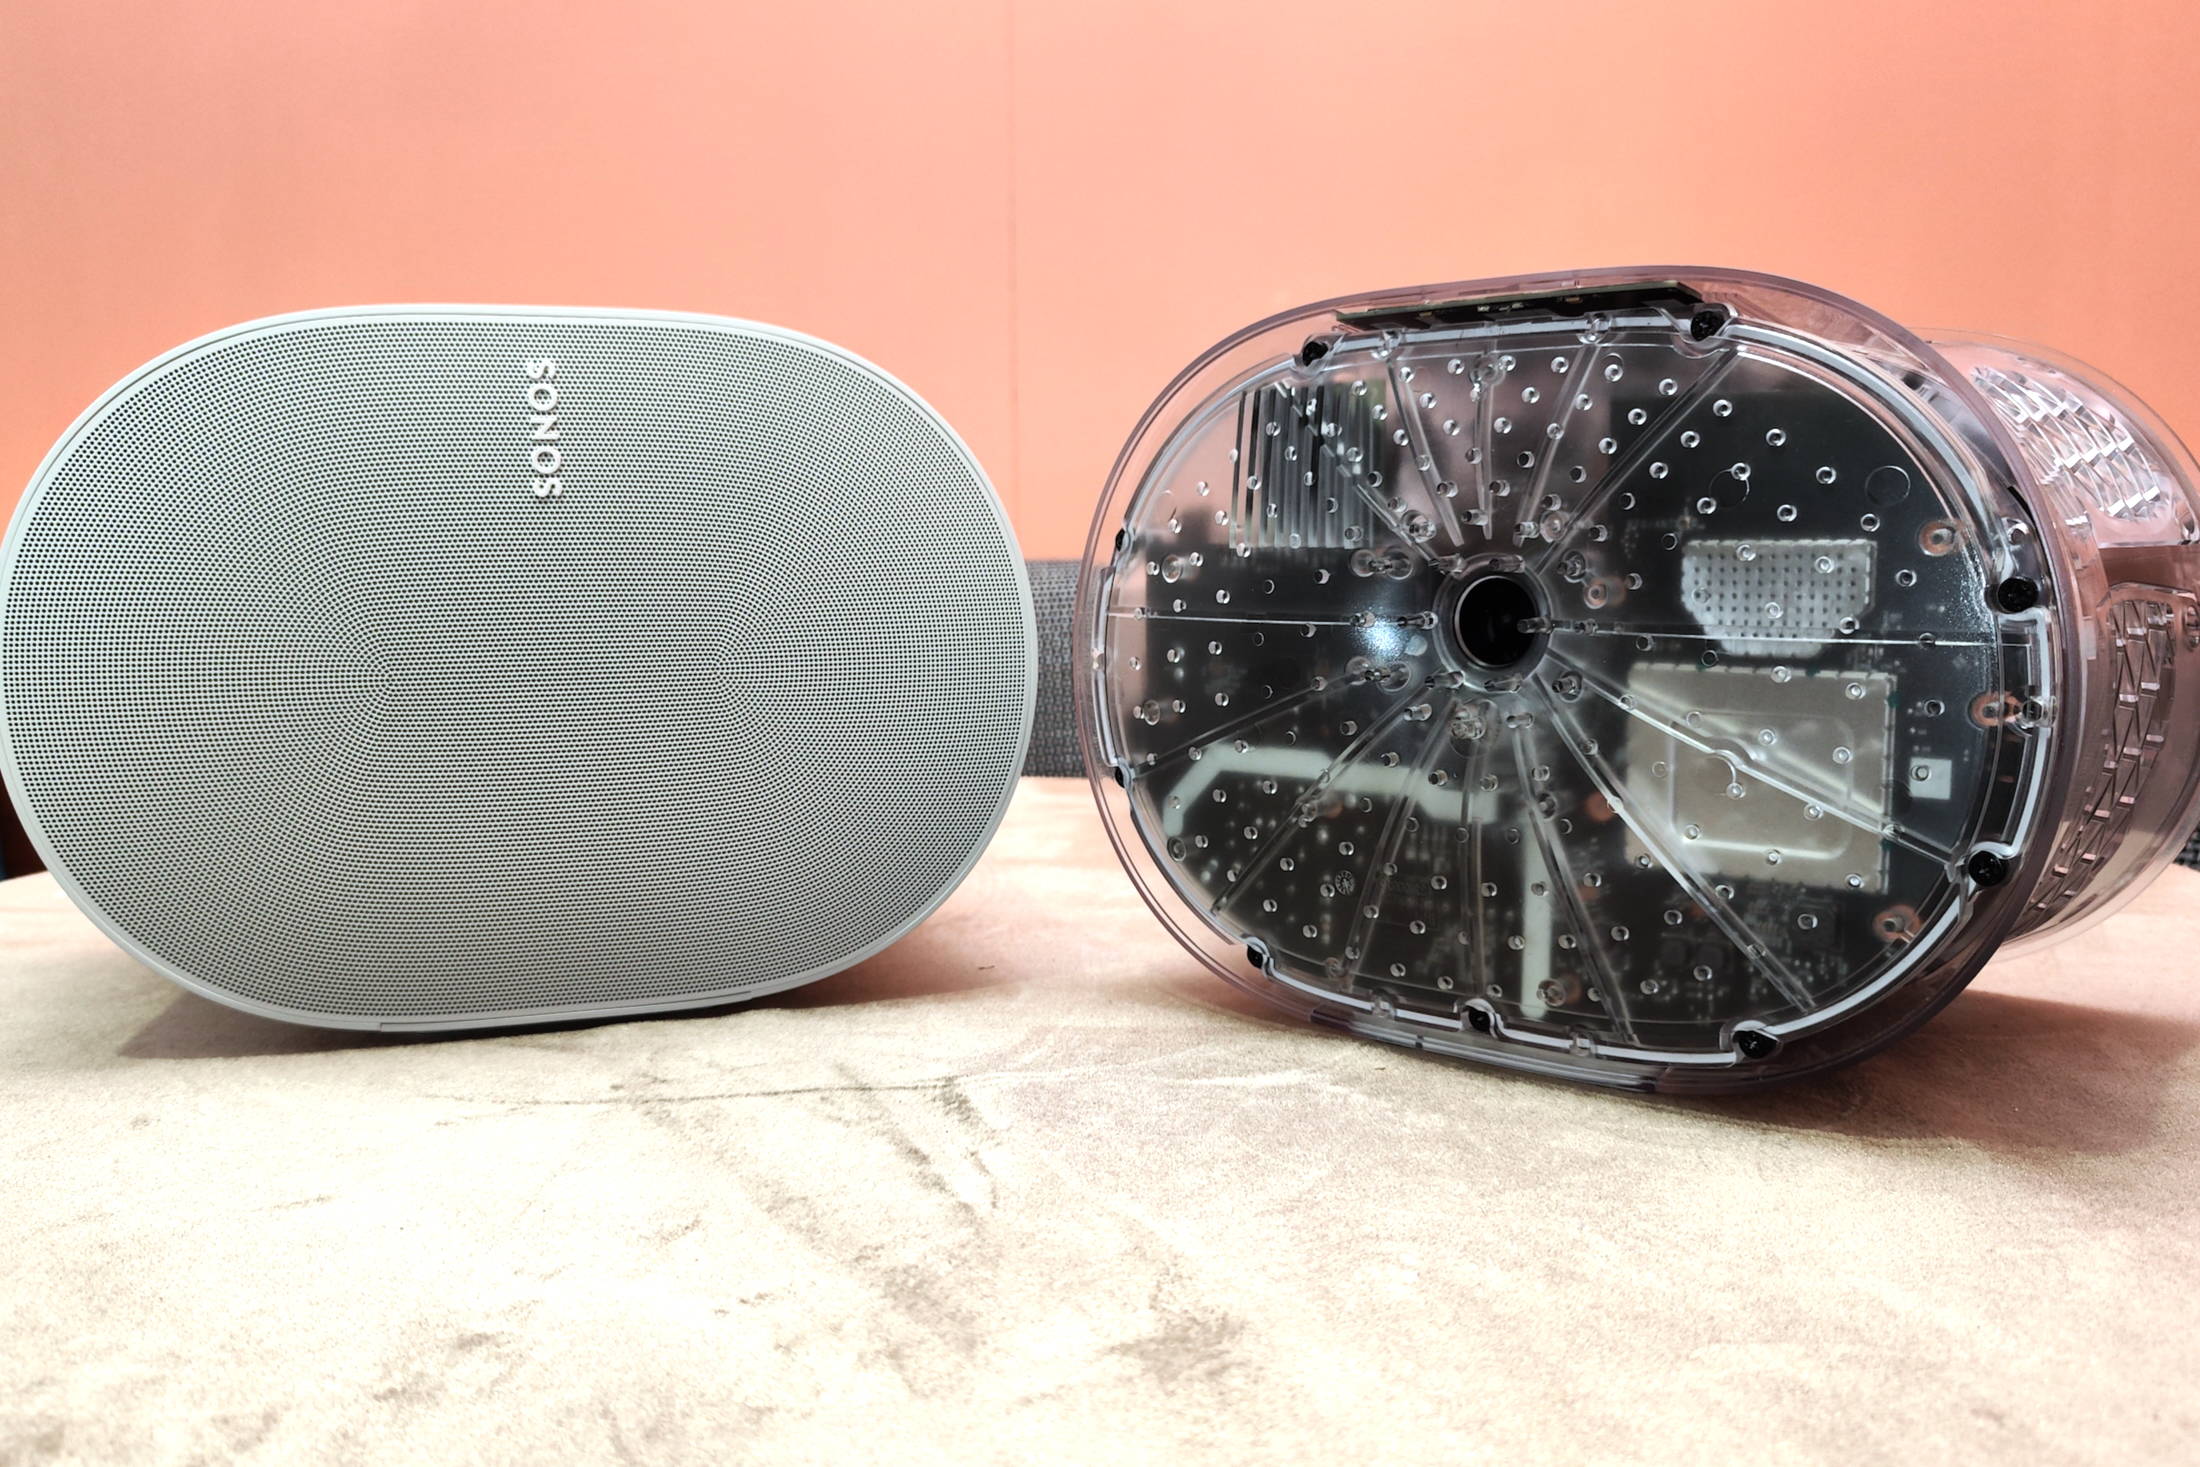 Sonos Era 300, beside a transparent version showing speaker internals.